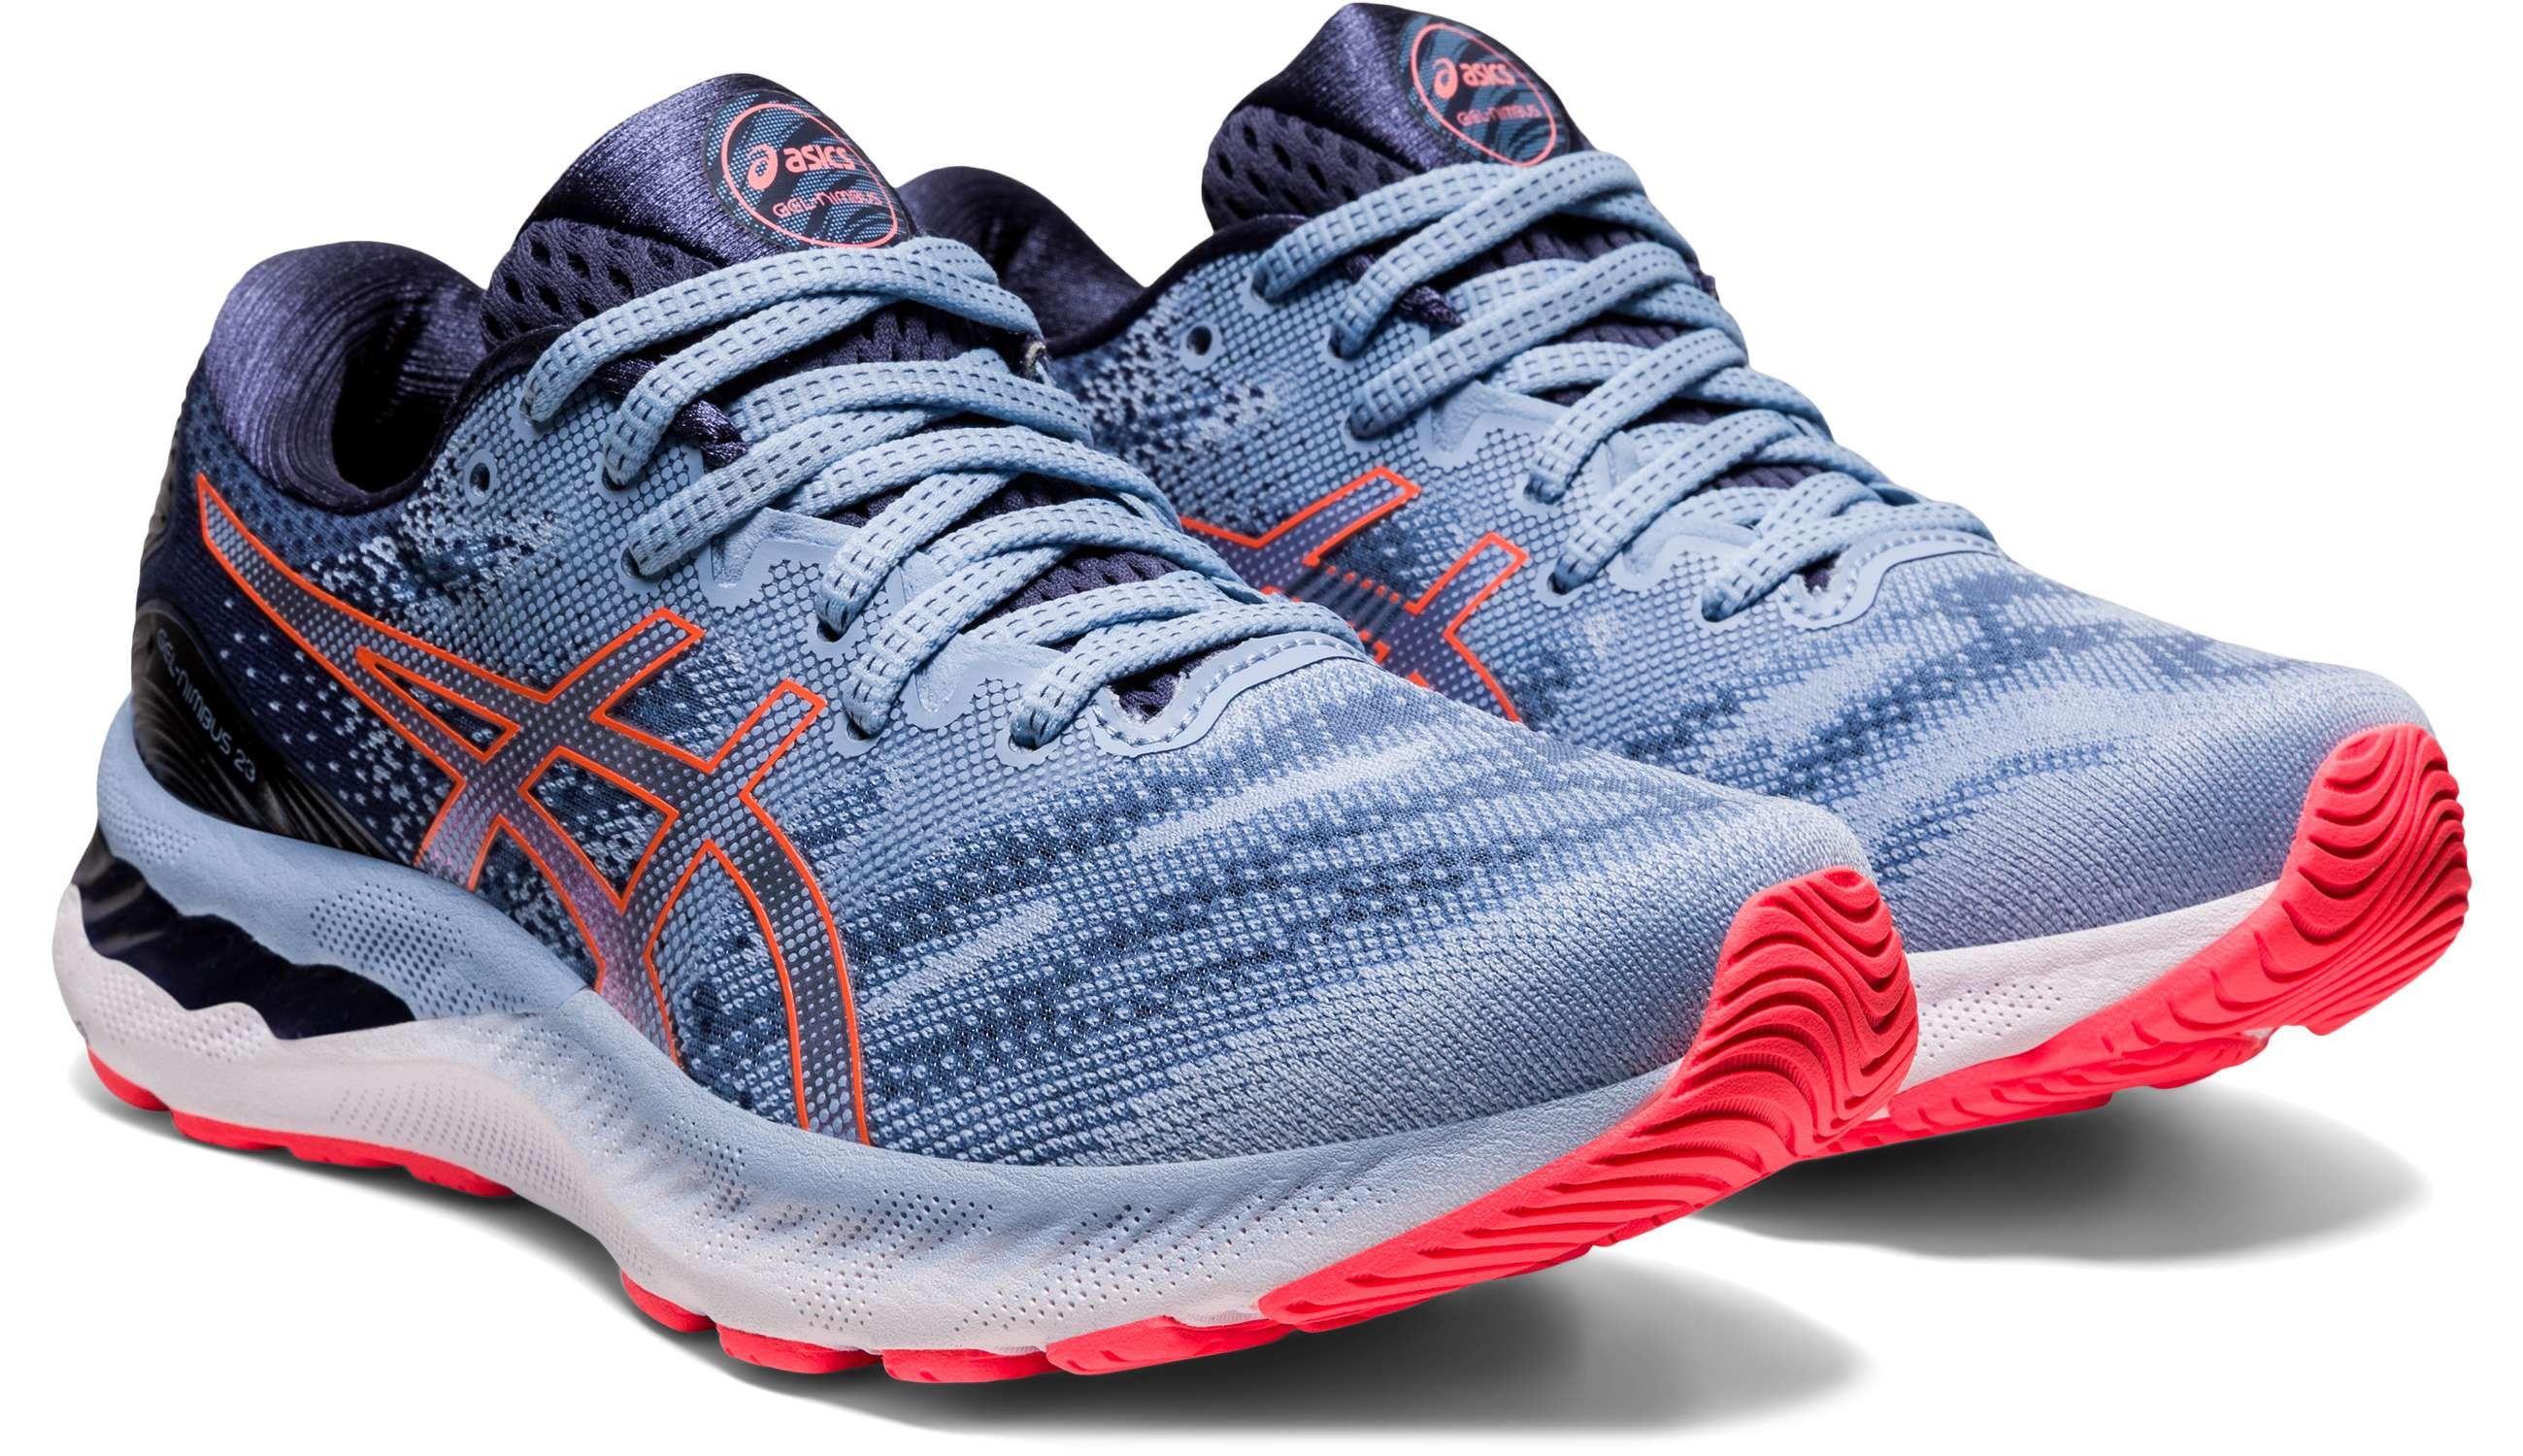 Asics Women's Gel-Nimbus 23 Running Shoes in Mist/Blazing Coral - Running Shoes - ASICS - ATR Sports